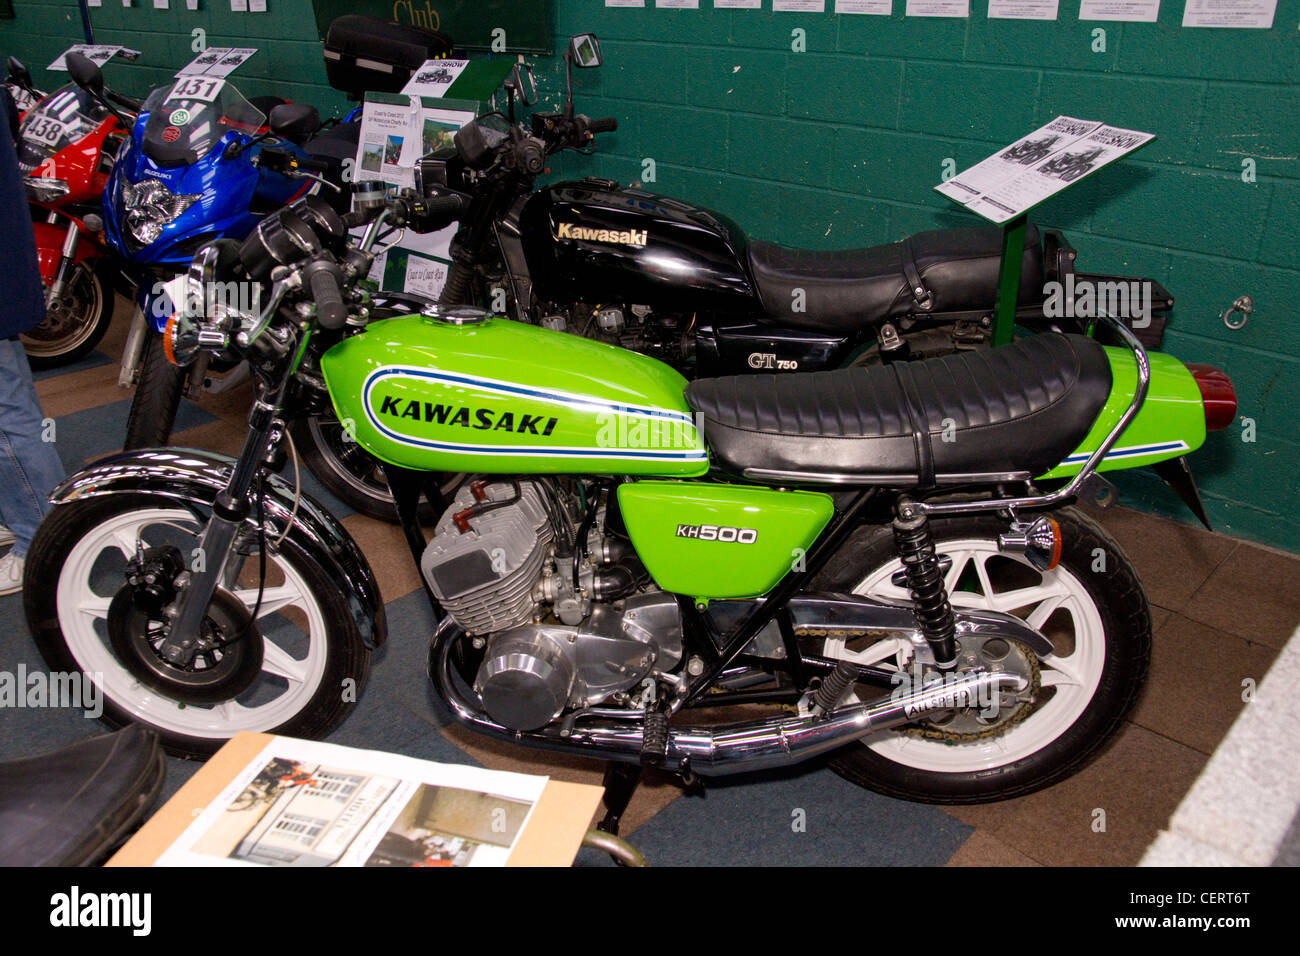 Page 3 - Kawasaki Motorcycle Bike Motorbike High Resolution Stock  Photography and Images - Alamy